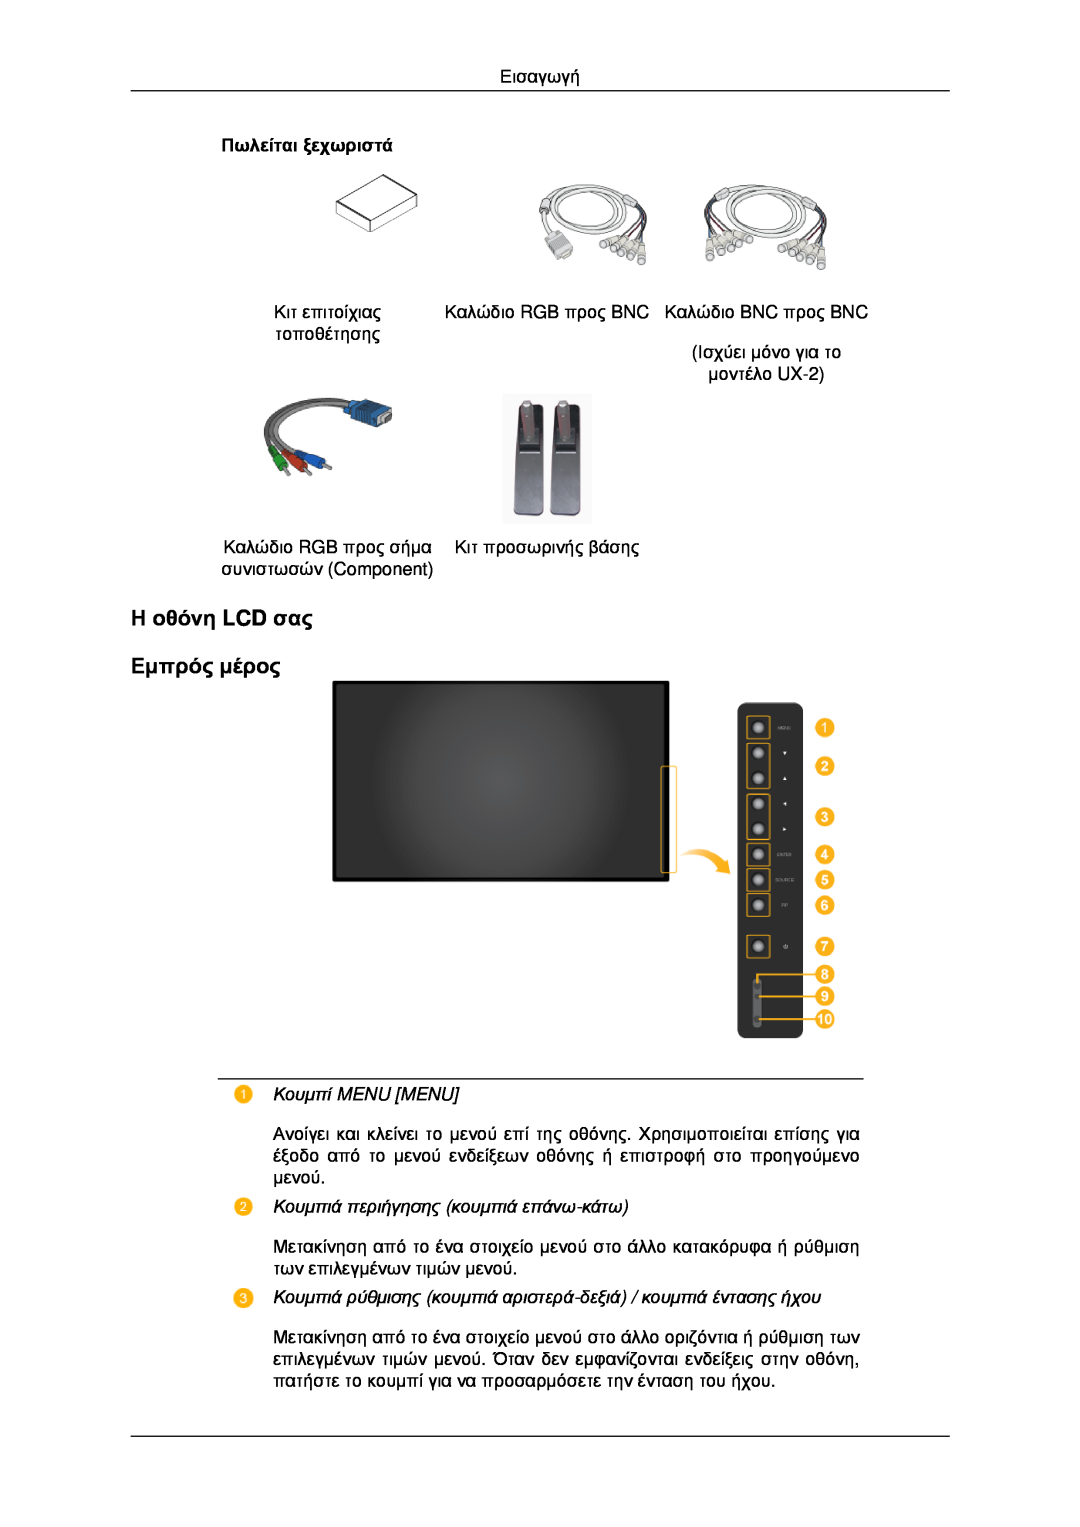 Samsung LH40MRPLBF/EN, LH46MRPLBF/EN Η οθόνη LCD σας Εμπρός μέρος, Κουμπί MENU MENU, Κουμπιά περιήγησης κουμπιά επάνω-κάτω 